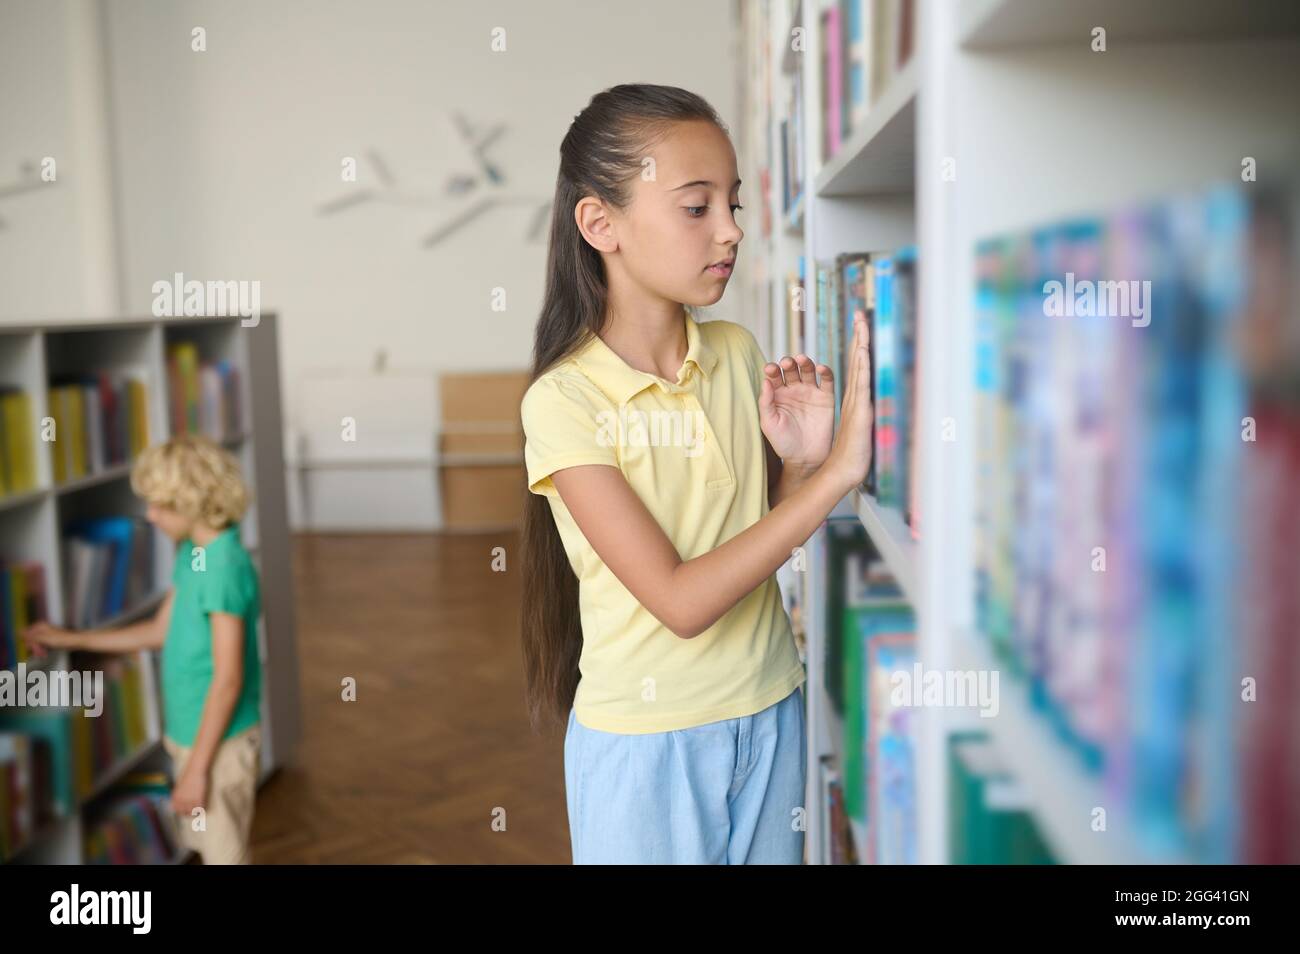 Two schoolchildren focused on choosing different books Stock Photo